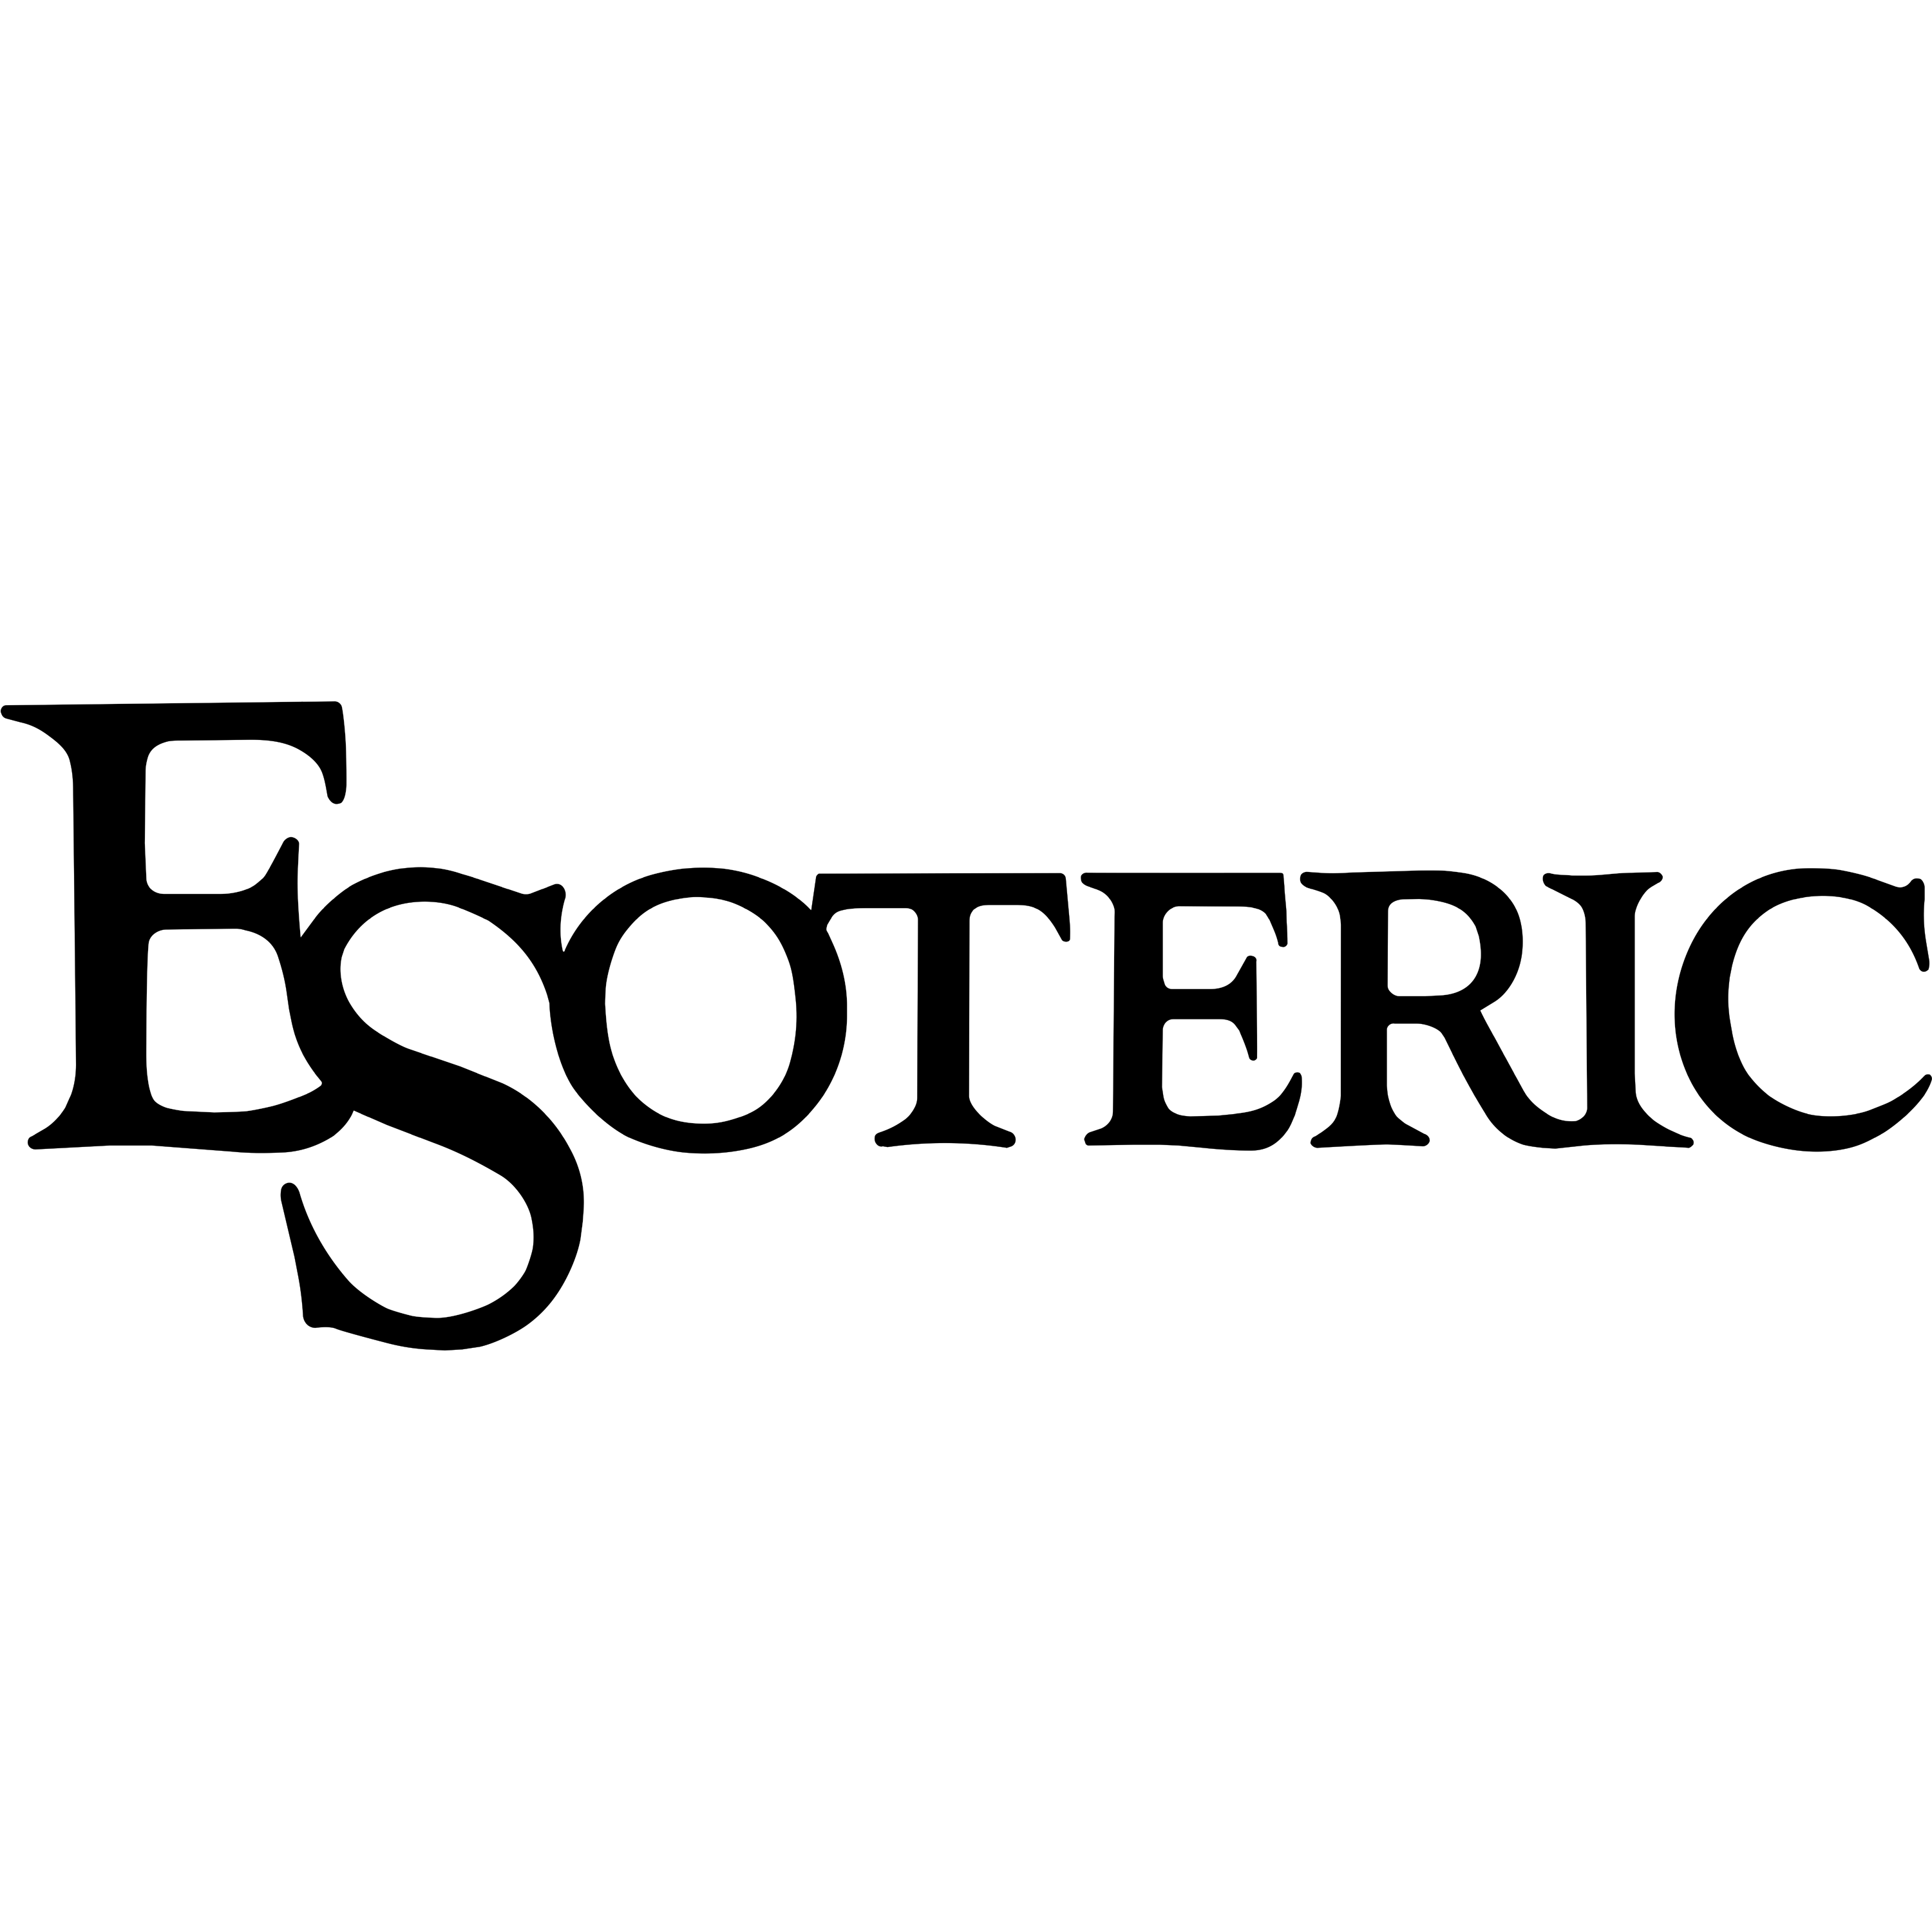 Esoteric Logo Transparent Image